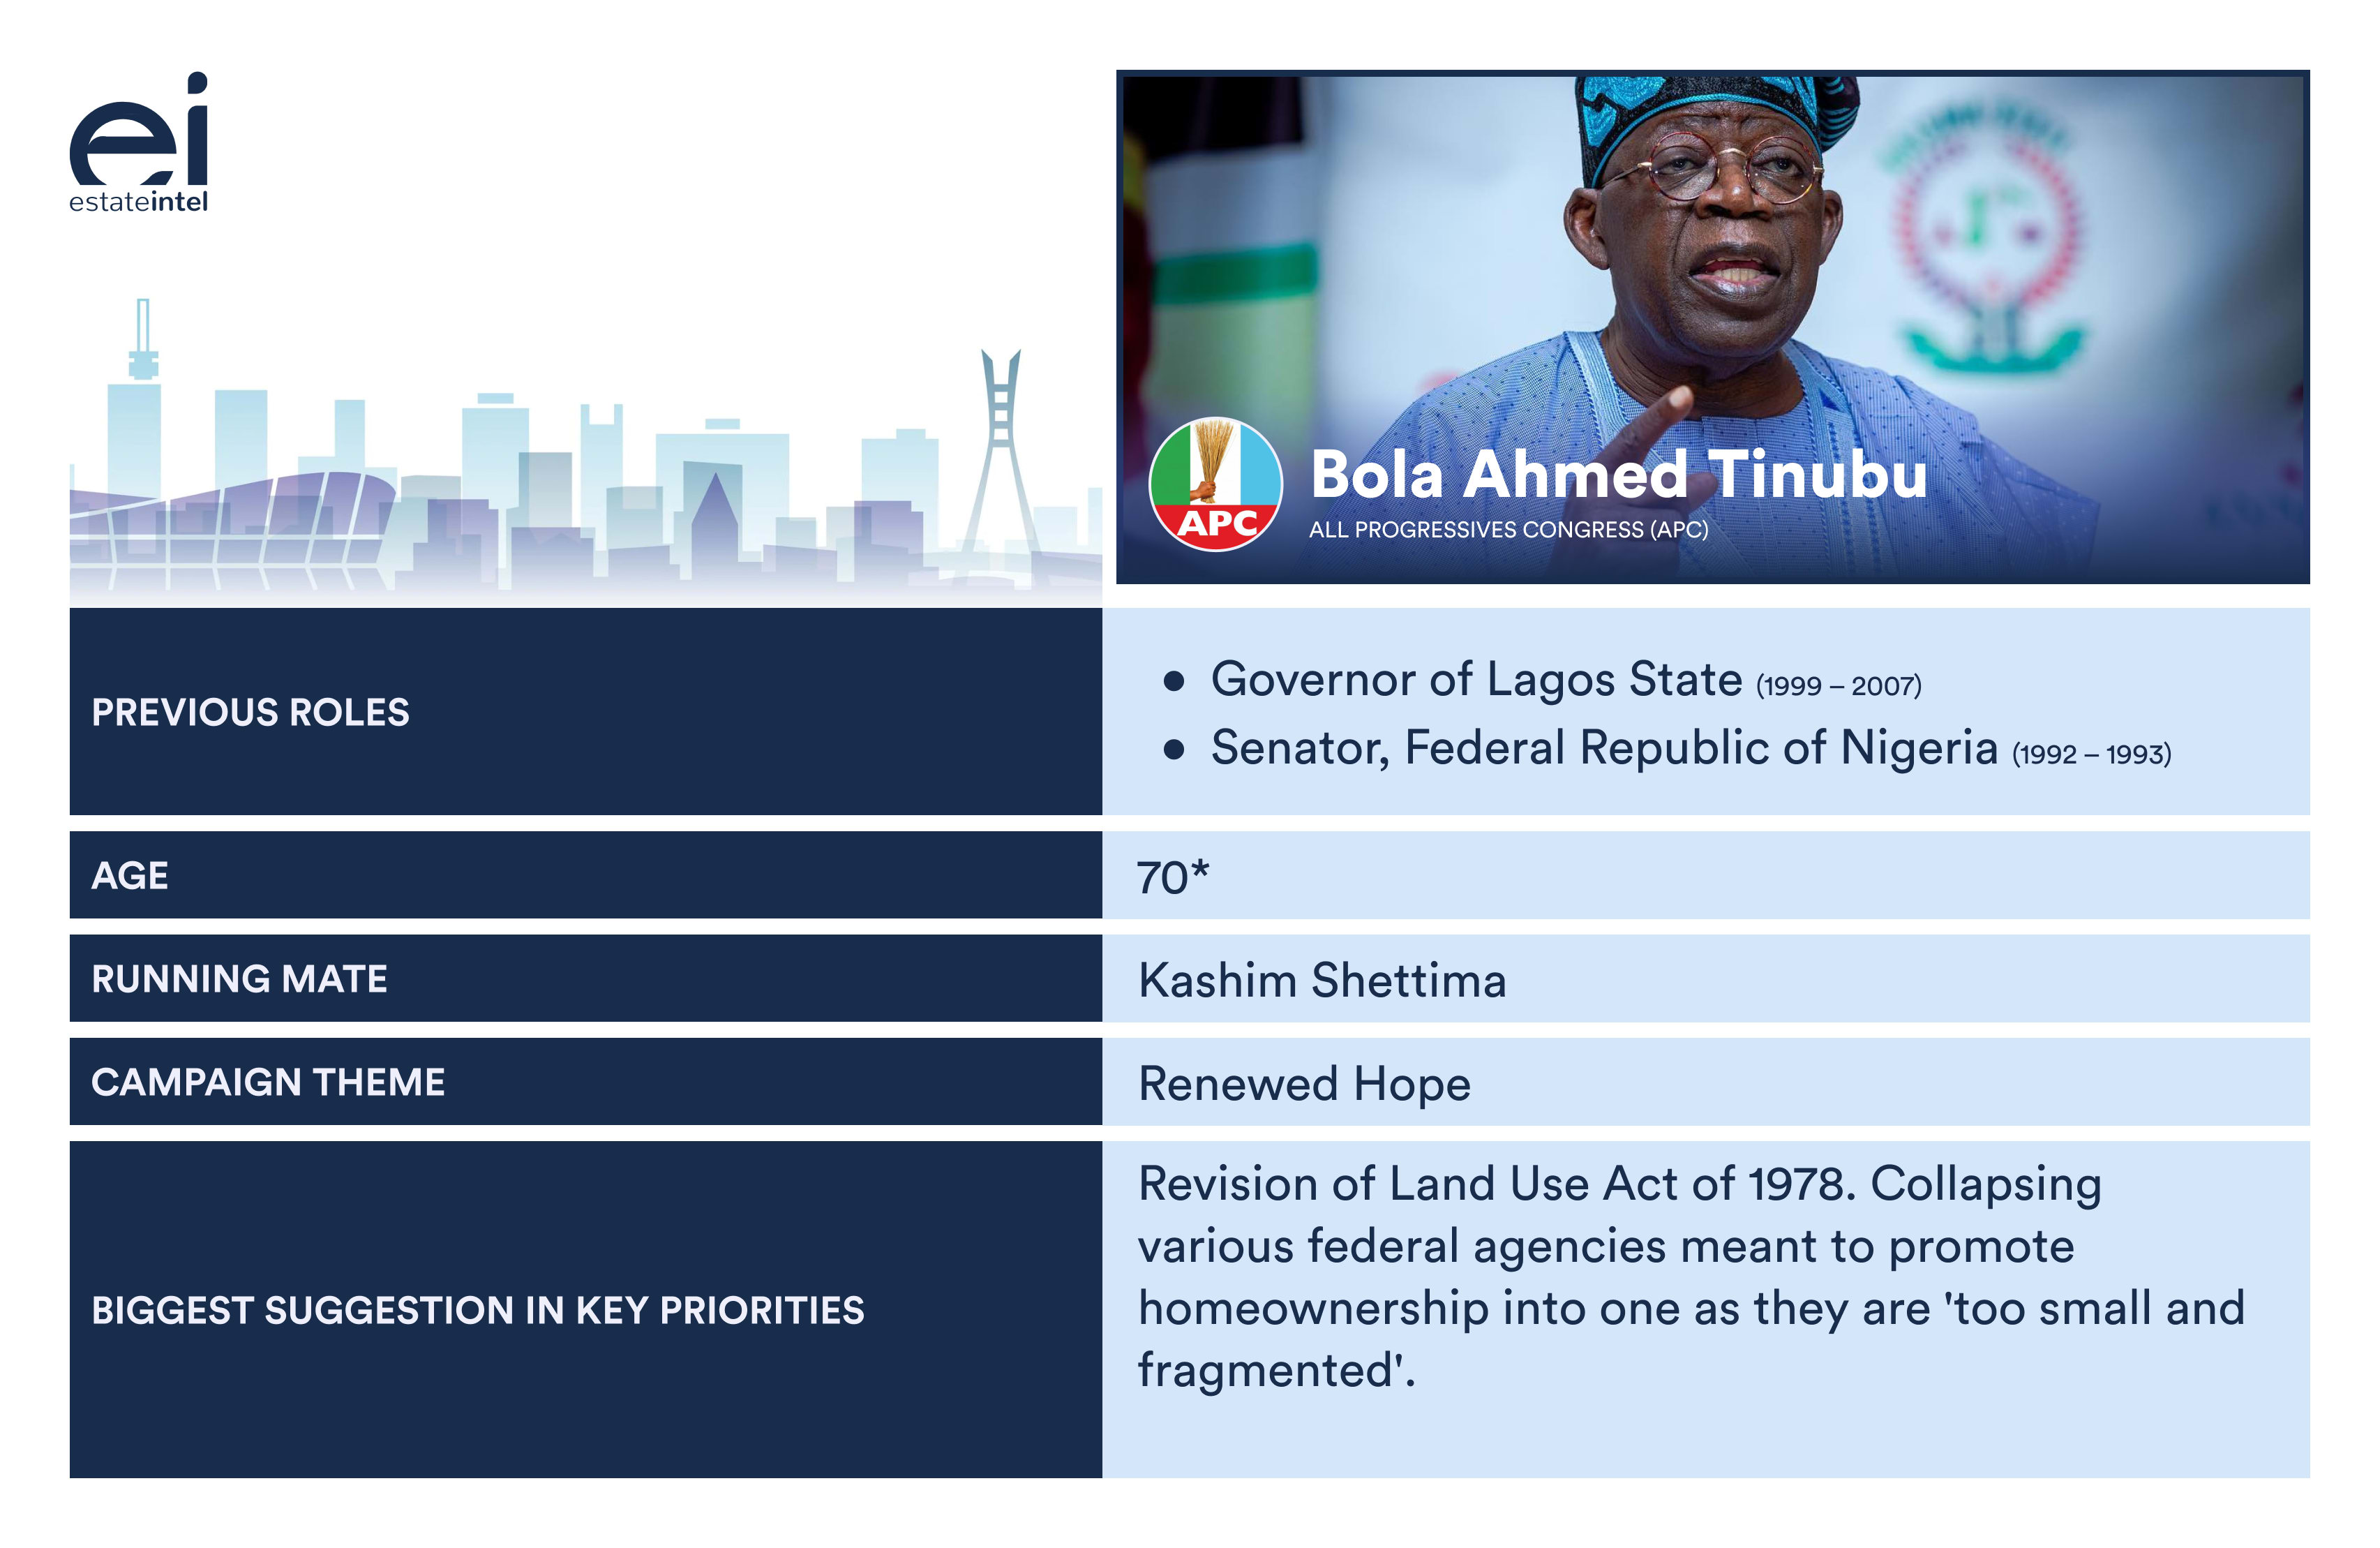 Atiku, Obi or Tinubu - Who is better for Nigerian Real Estate?